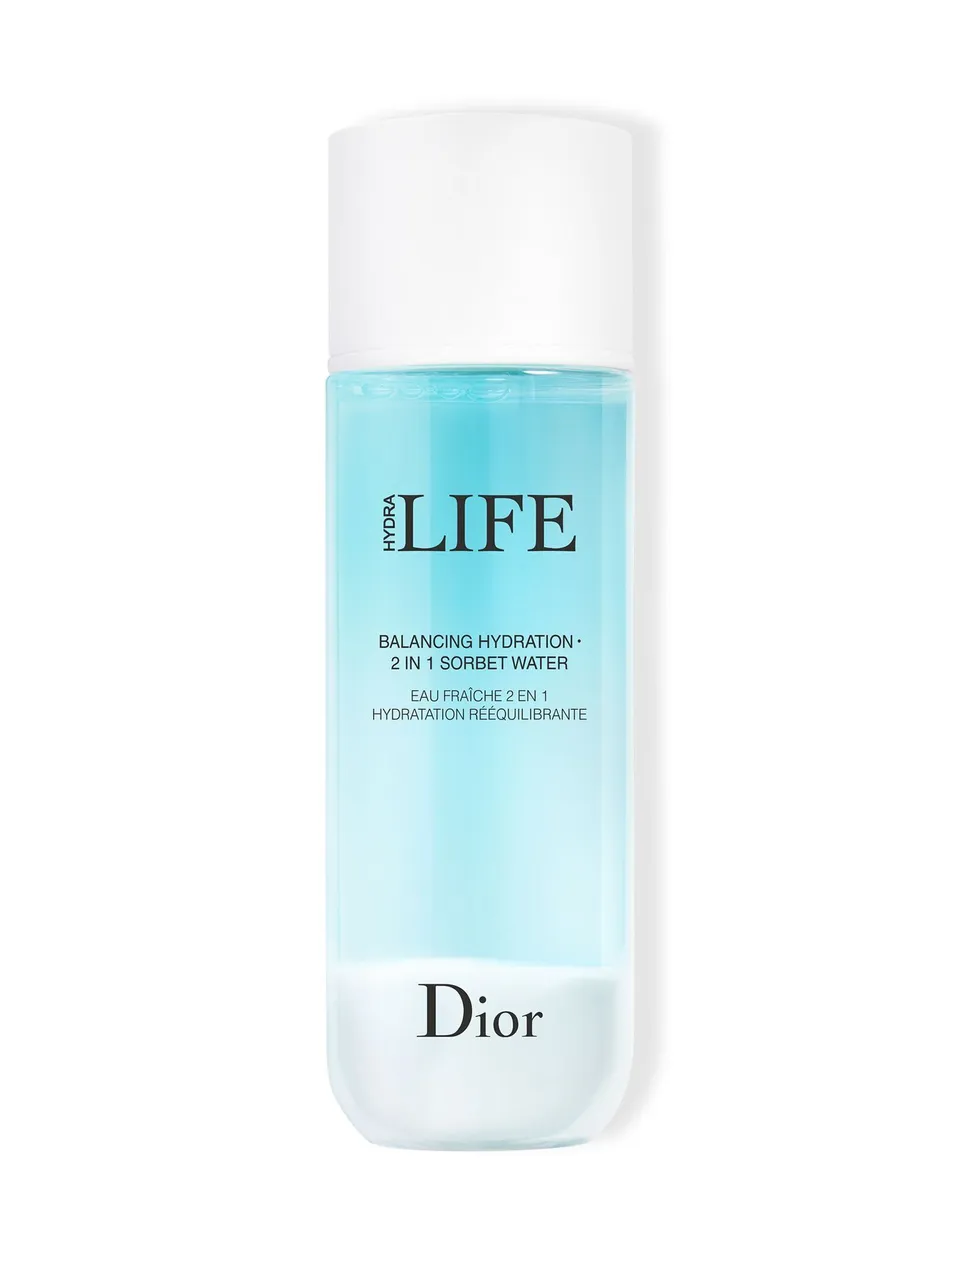 Christian Dior Hydra Life Balancing Hydration - 2-in-1 Sorbet Water, 175ml - Unisex - Size: 175ml